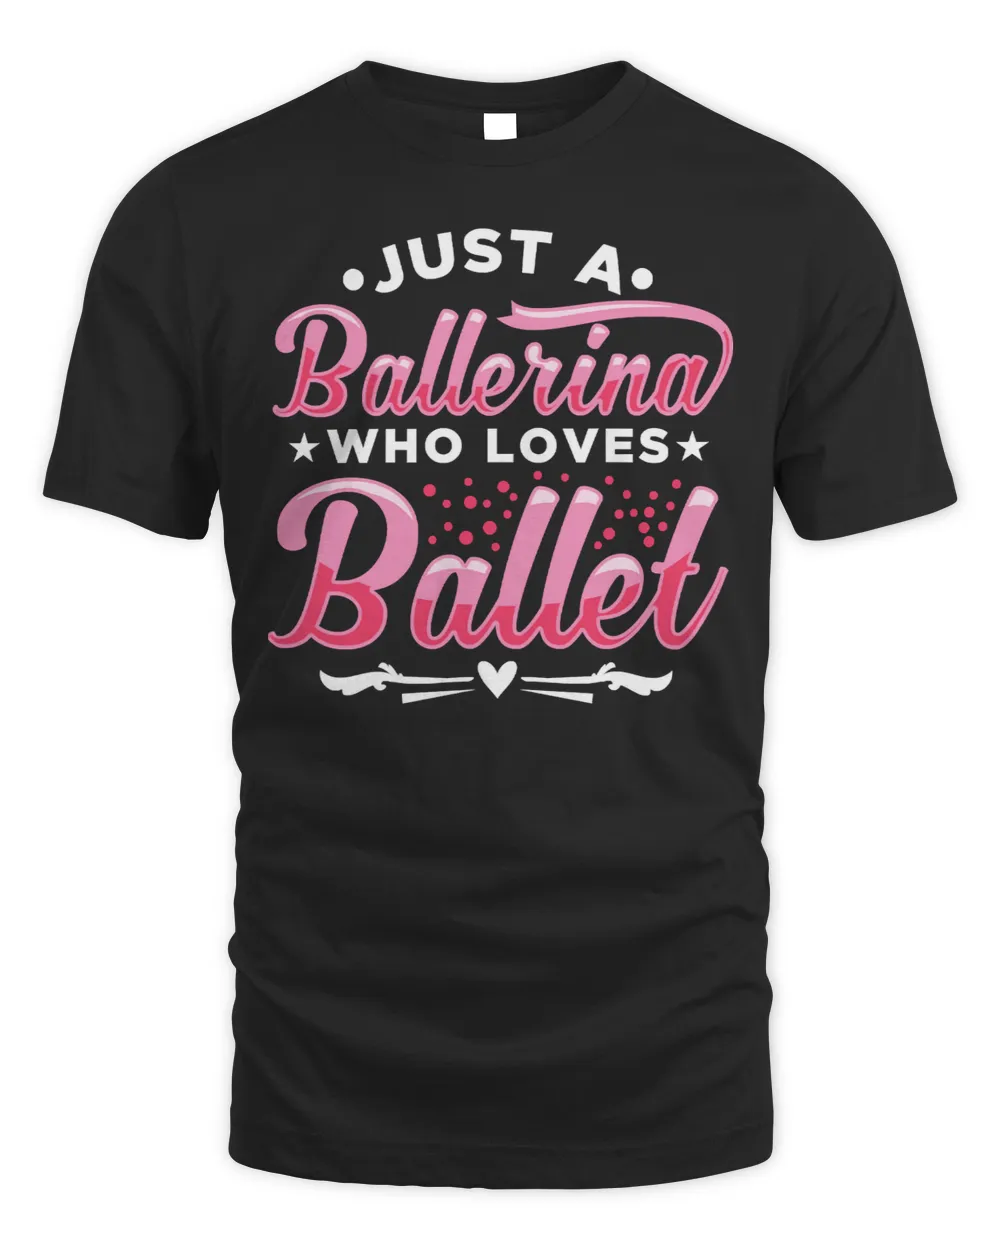 Ballet Balle Ballerina 123 Balle Ballerina